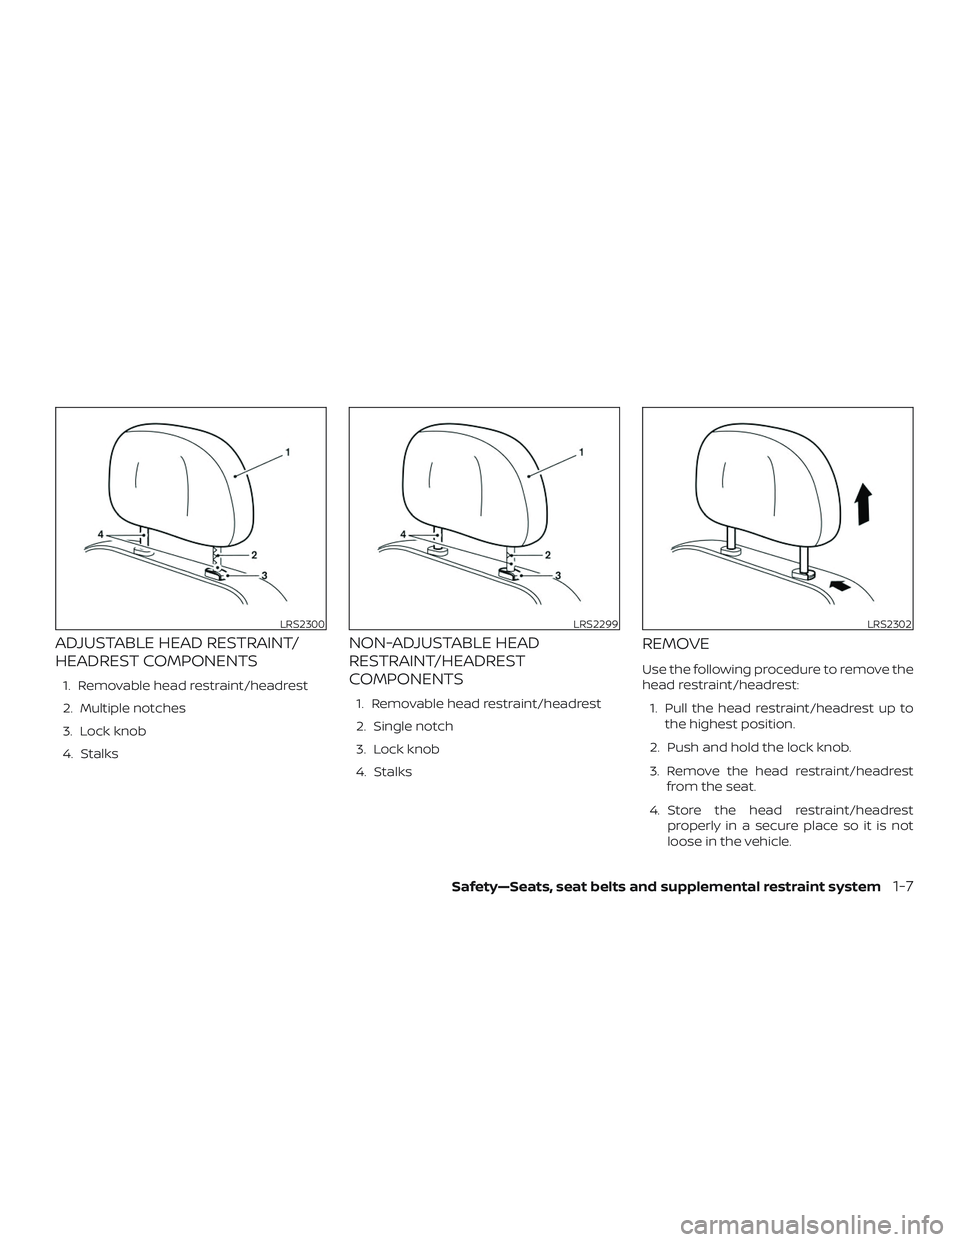 NISSAN VERSA NOTE 2020  Owner´s Manual ADJUSTABLE HEAD RESTRAINT/
HEADREST COMPONENTS
1. Removable head restraint/headrest
2. Multiple notches
3. Lock knob
4. Stalks
NON-ADJUSTABLE HEAD
RESTRAINT/HEADREST
COMPONENTS
1. Removable head restr